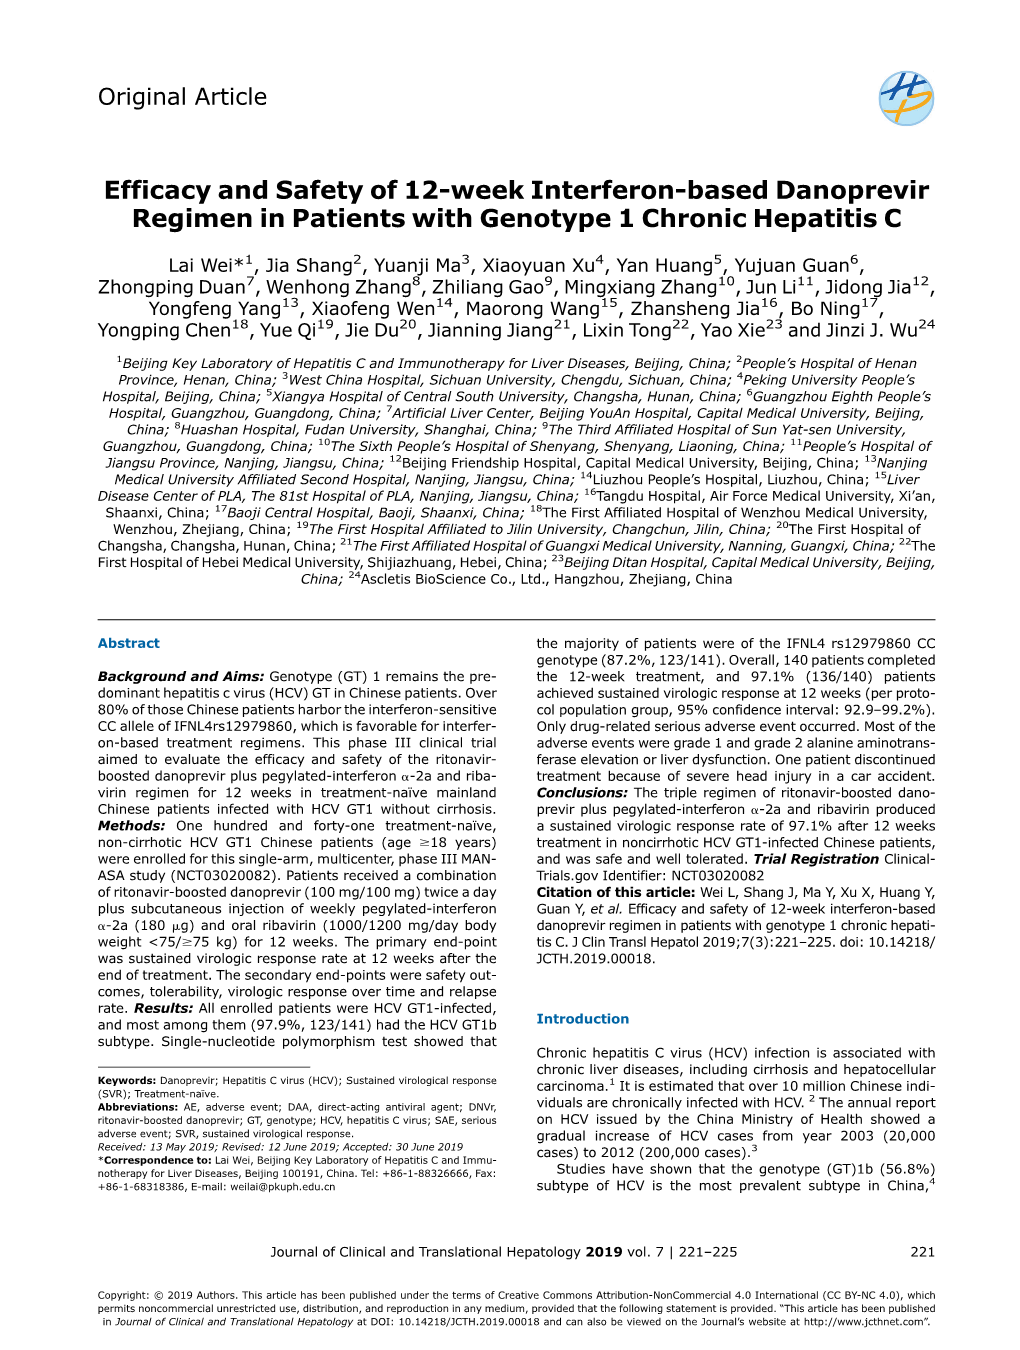 Efficacy and Safety of 12-Week Interferon-Based Danoprevir Regimen in Patients with Genotype 1 Chronic Hepatitis C